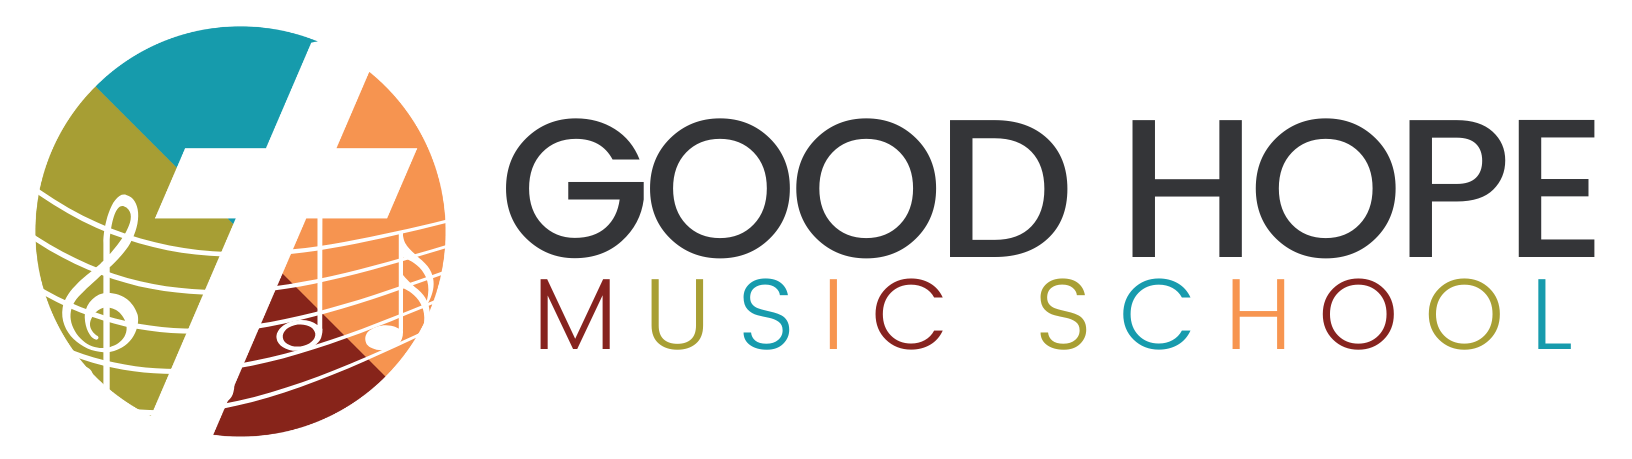 Good Hope Music School